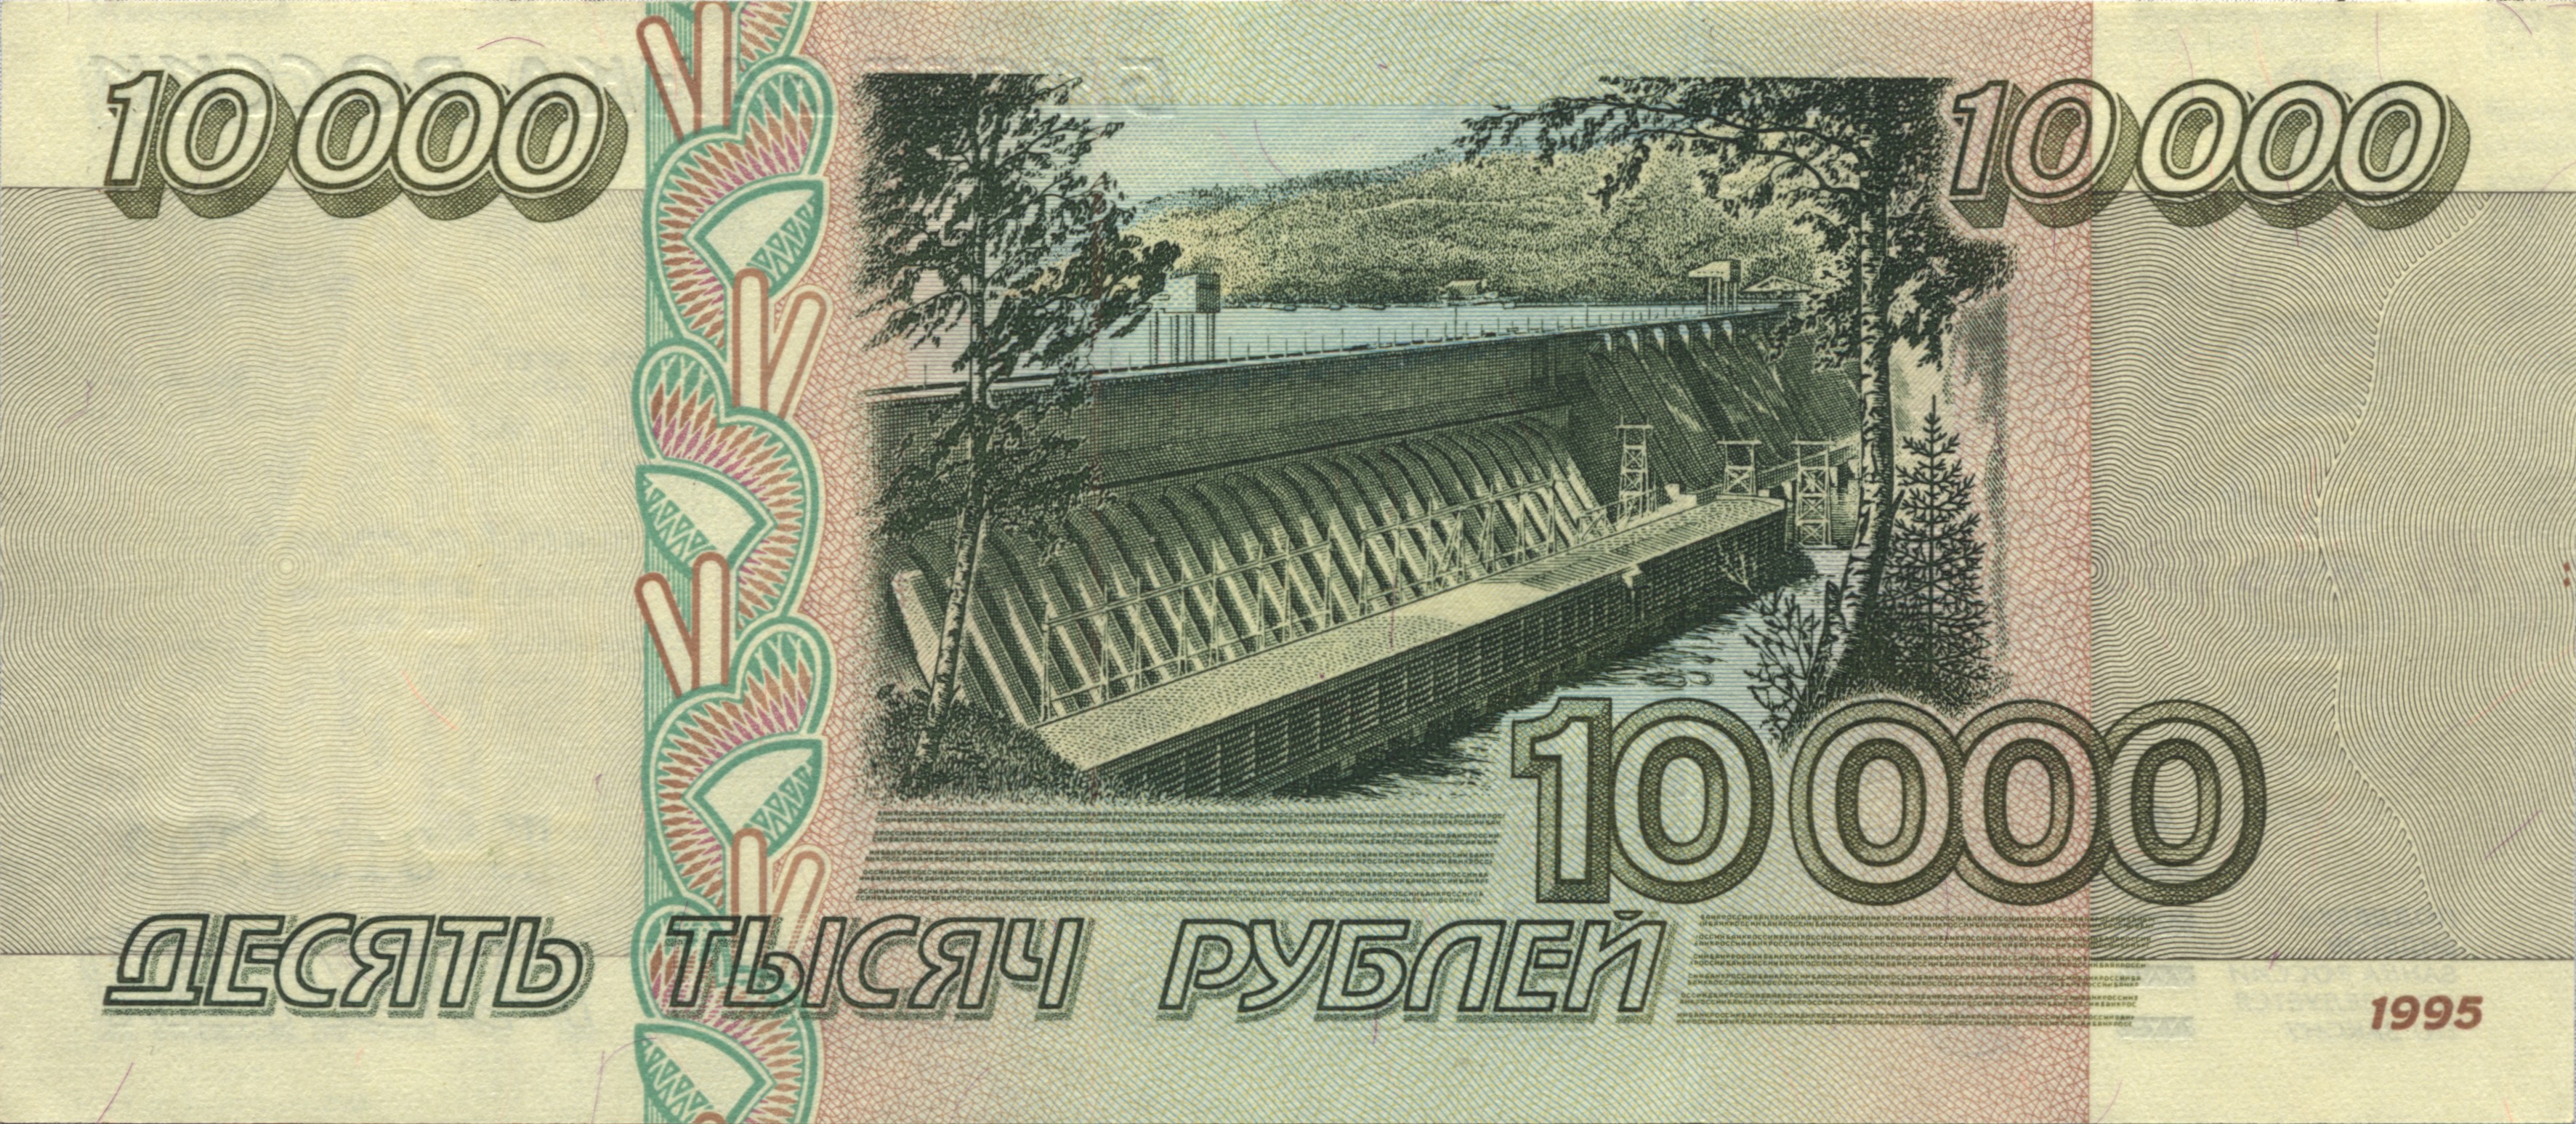 img.readtiger.com wkp ru Banknote 10000 rubles %281995%29 back В Астрахани мошенник хотел расплатиться вышедшими из оборота деньгами